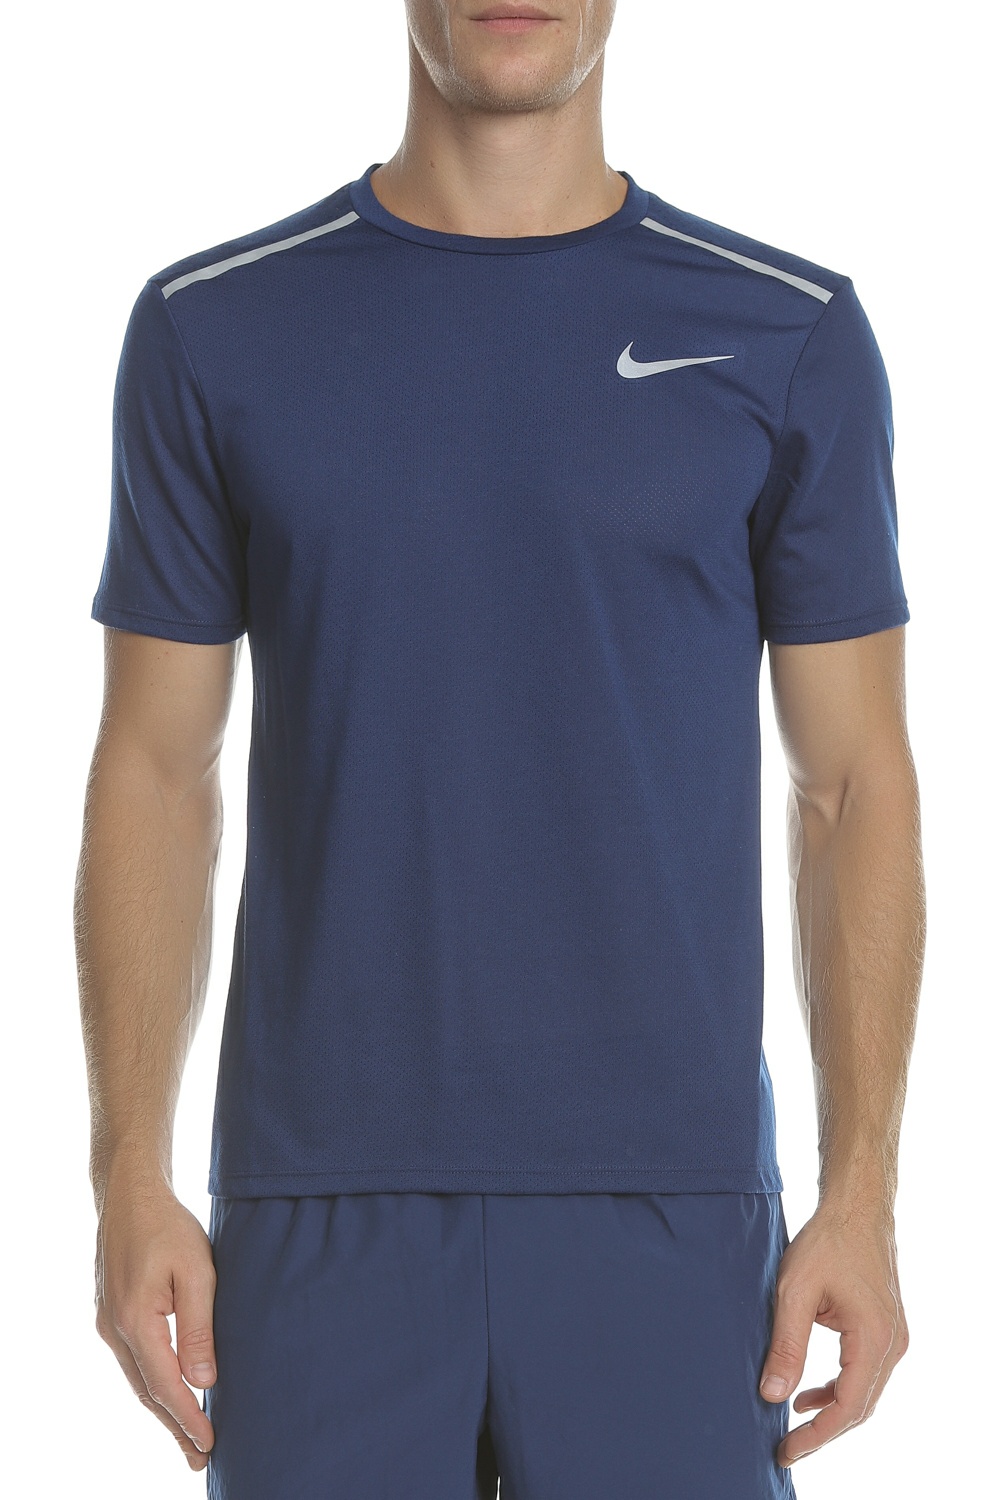 NIKE - Ανδρική κοντομάνικη μπλούζα NIKE BRTHE RISE 365 TOP SS 1.0 μπλε Ανδρικά/Ρούχα/Αθλητικά/T-shirt